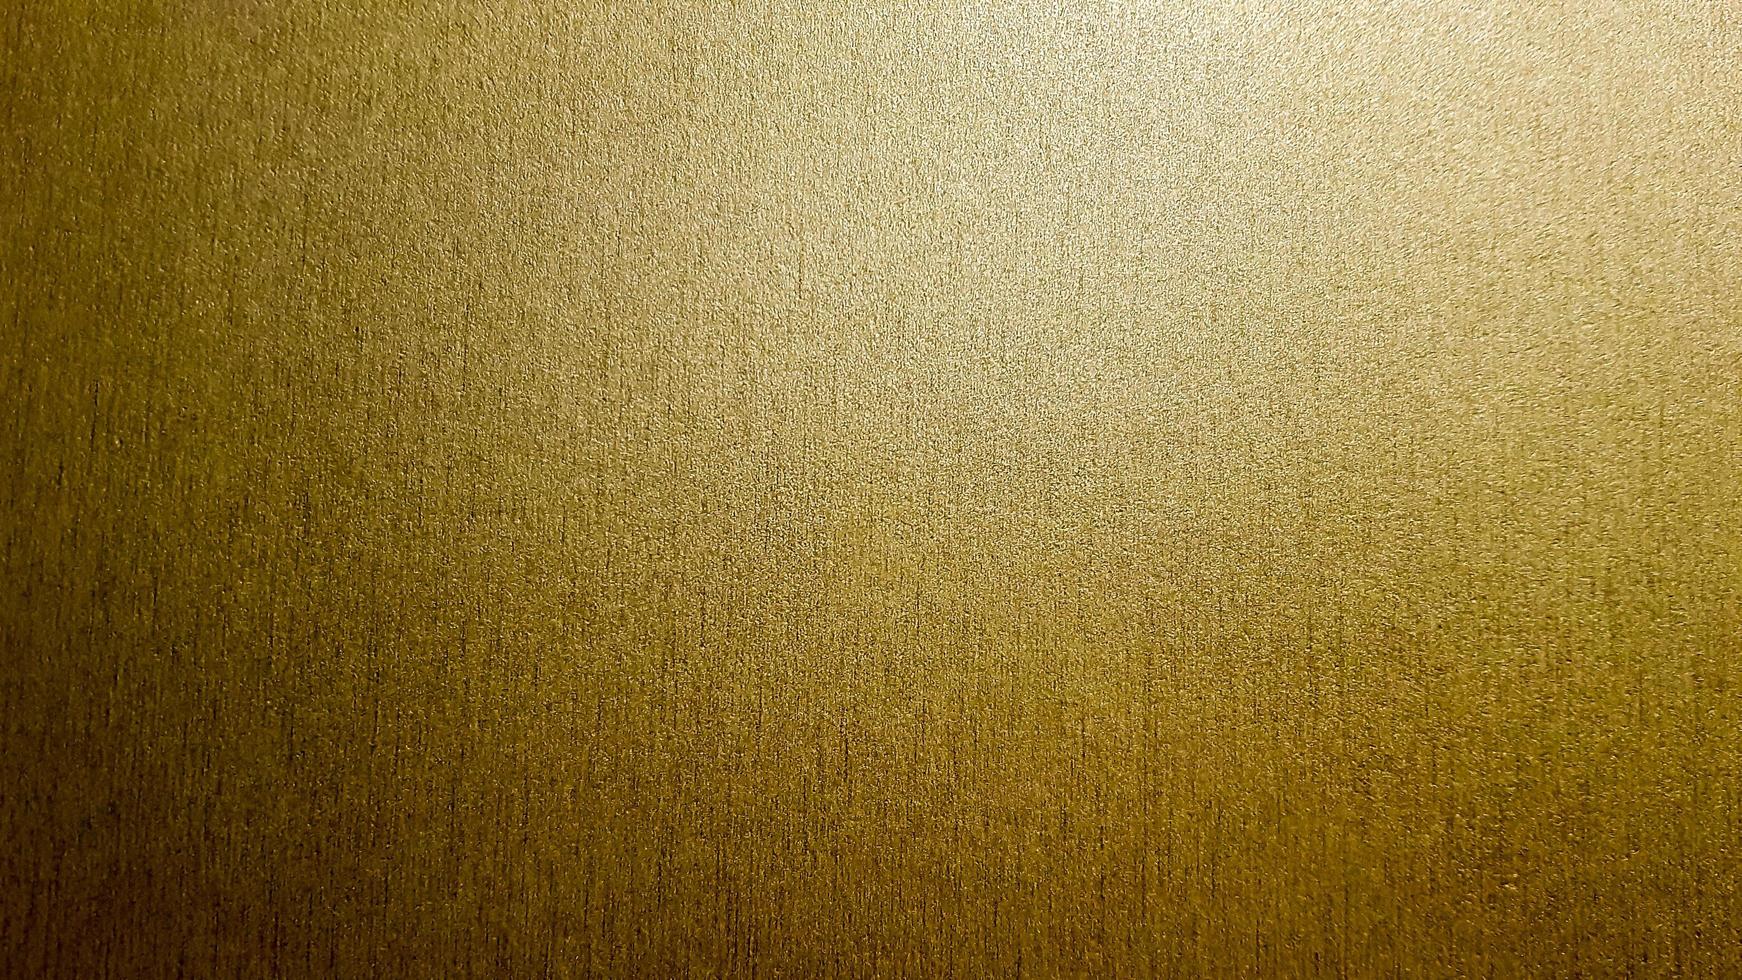 fondo dorado o textura y sombra degradada. fondo de textura de azulejos de mosaico amarillo dorado de pared y suelo. fondo de textura de metal en oro.panorama textura de oro foto